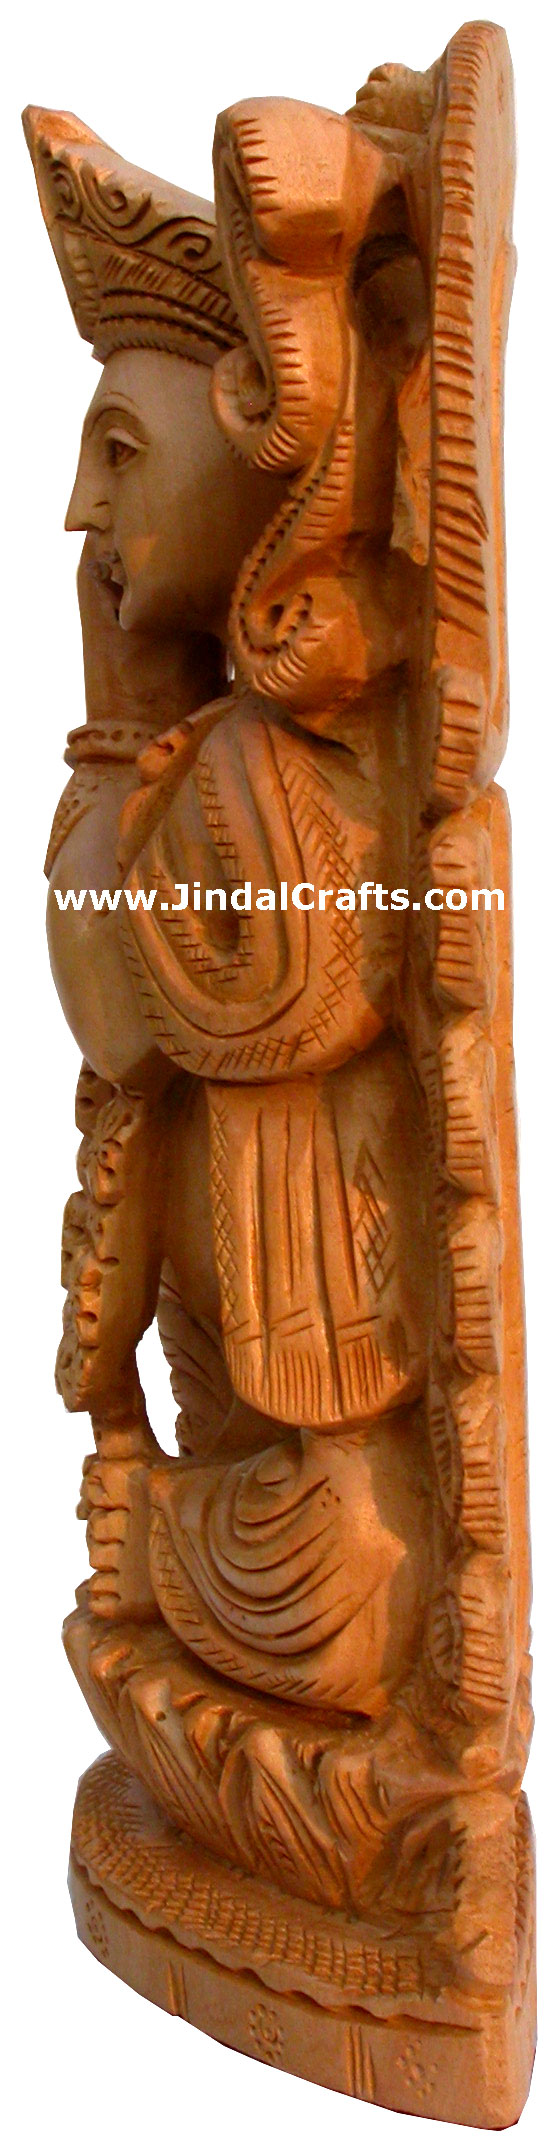 Krishna Hand Carving India Religious Sculptures Crafts